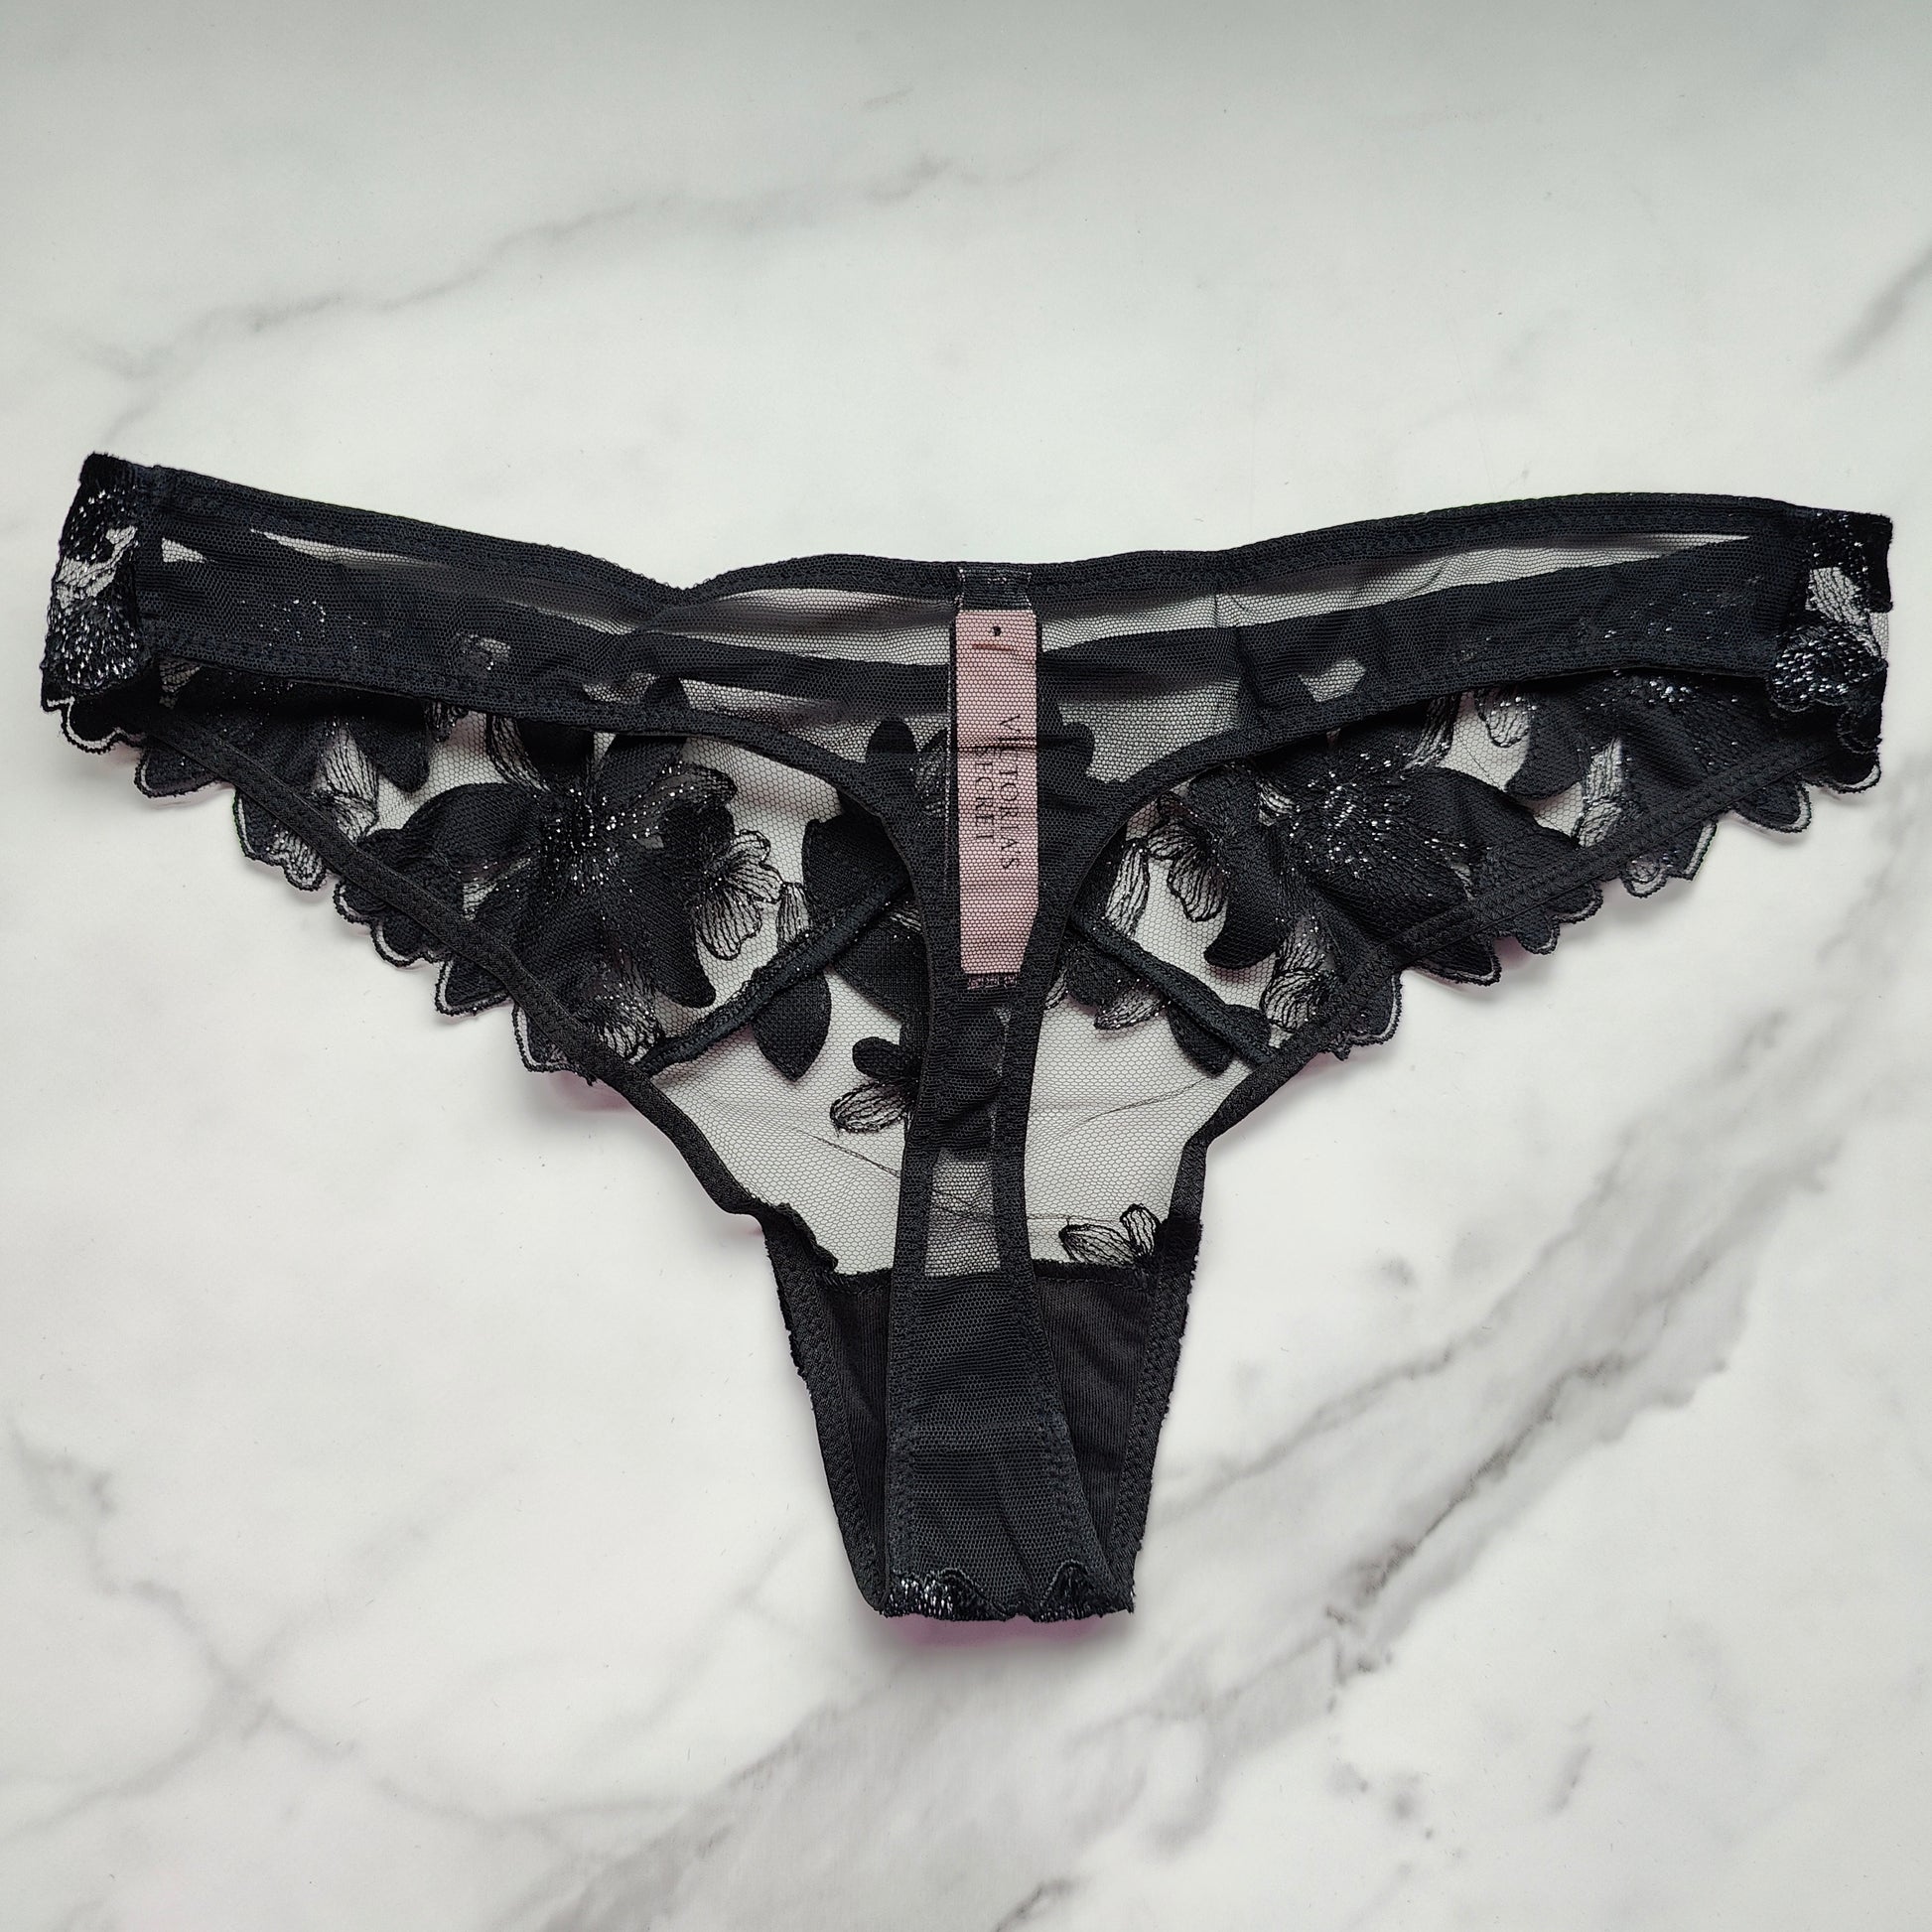 VICTORIA'S SECRET VERY SEXY Black Floral Lace & Mesh Low Rise Cheeky Panty  L XL